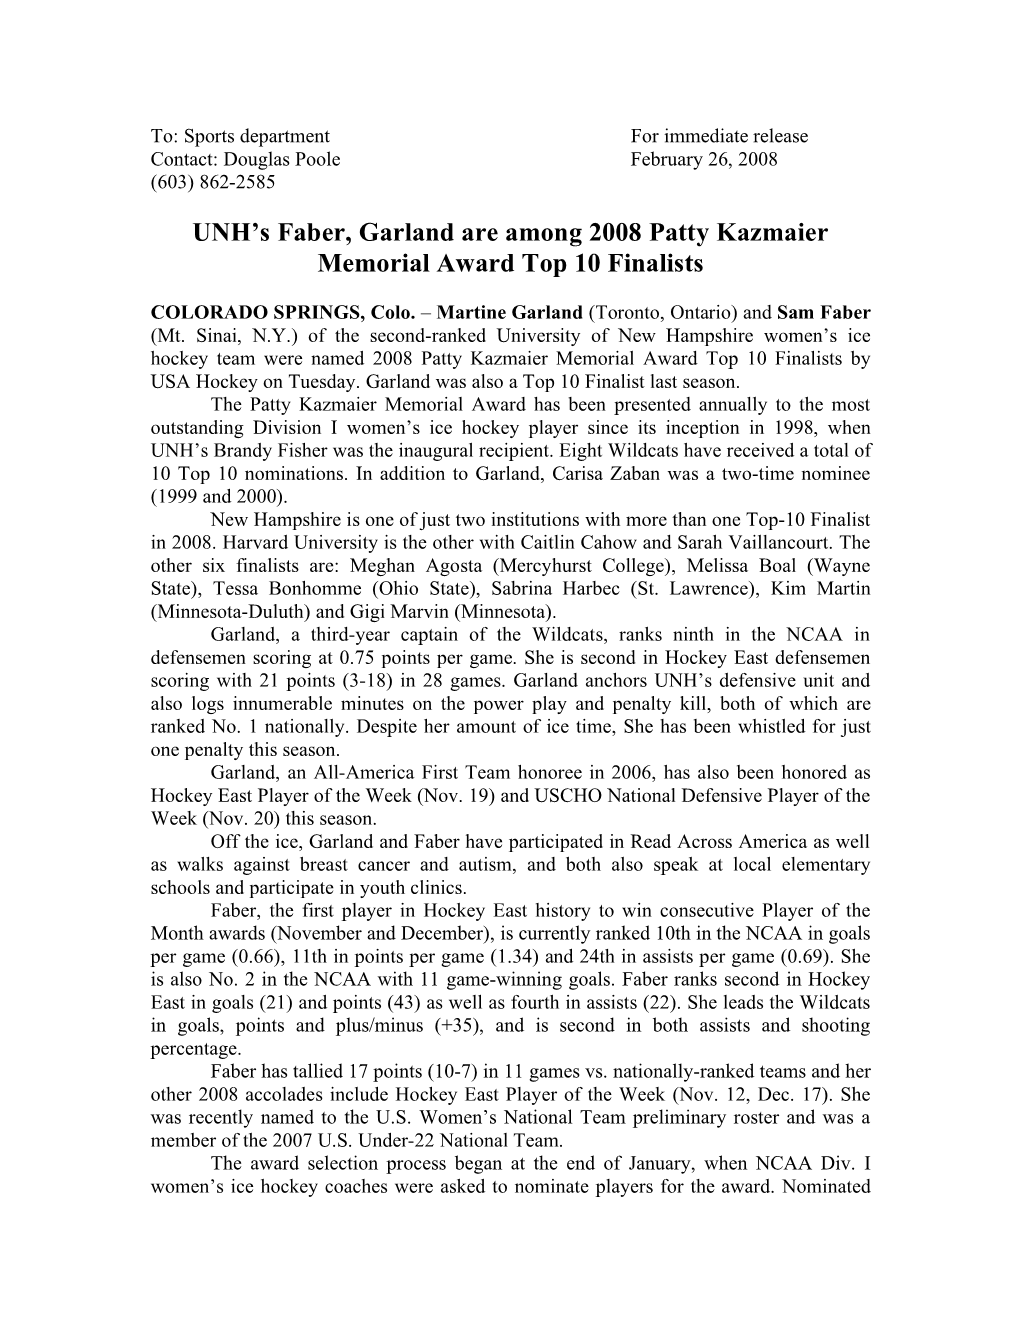 UNH's Faber, Garland Are Among 2008 Patty Kazmaier Memorial